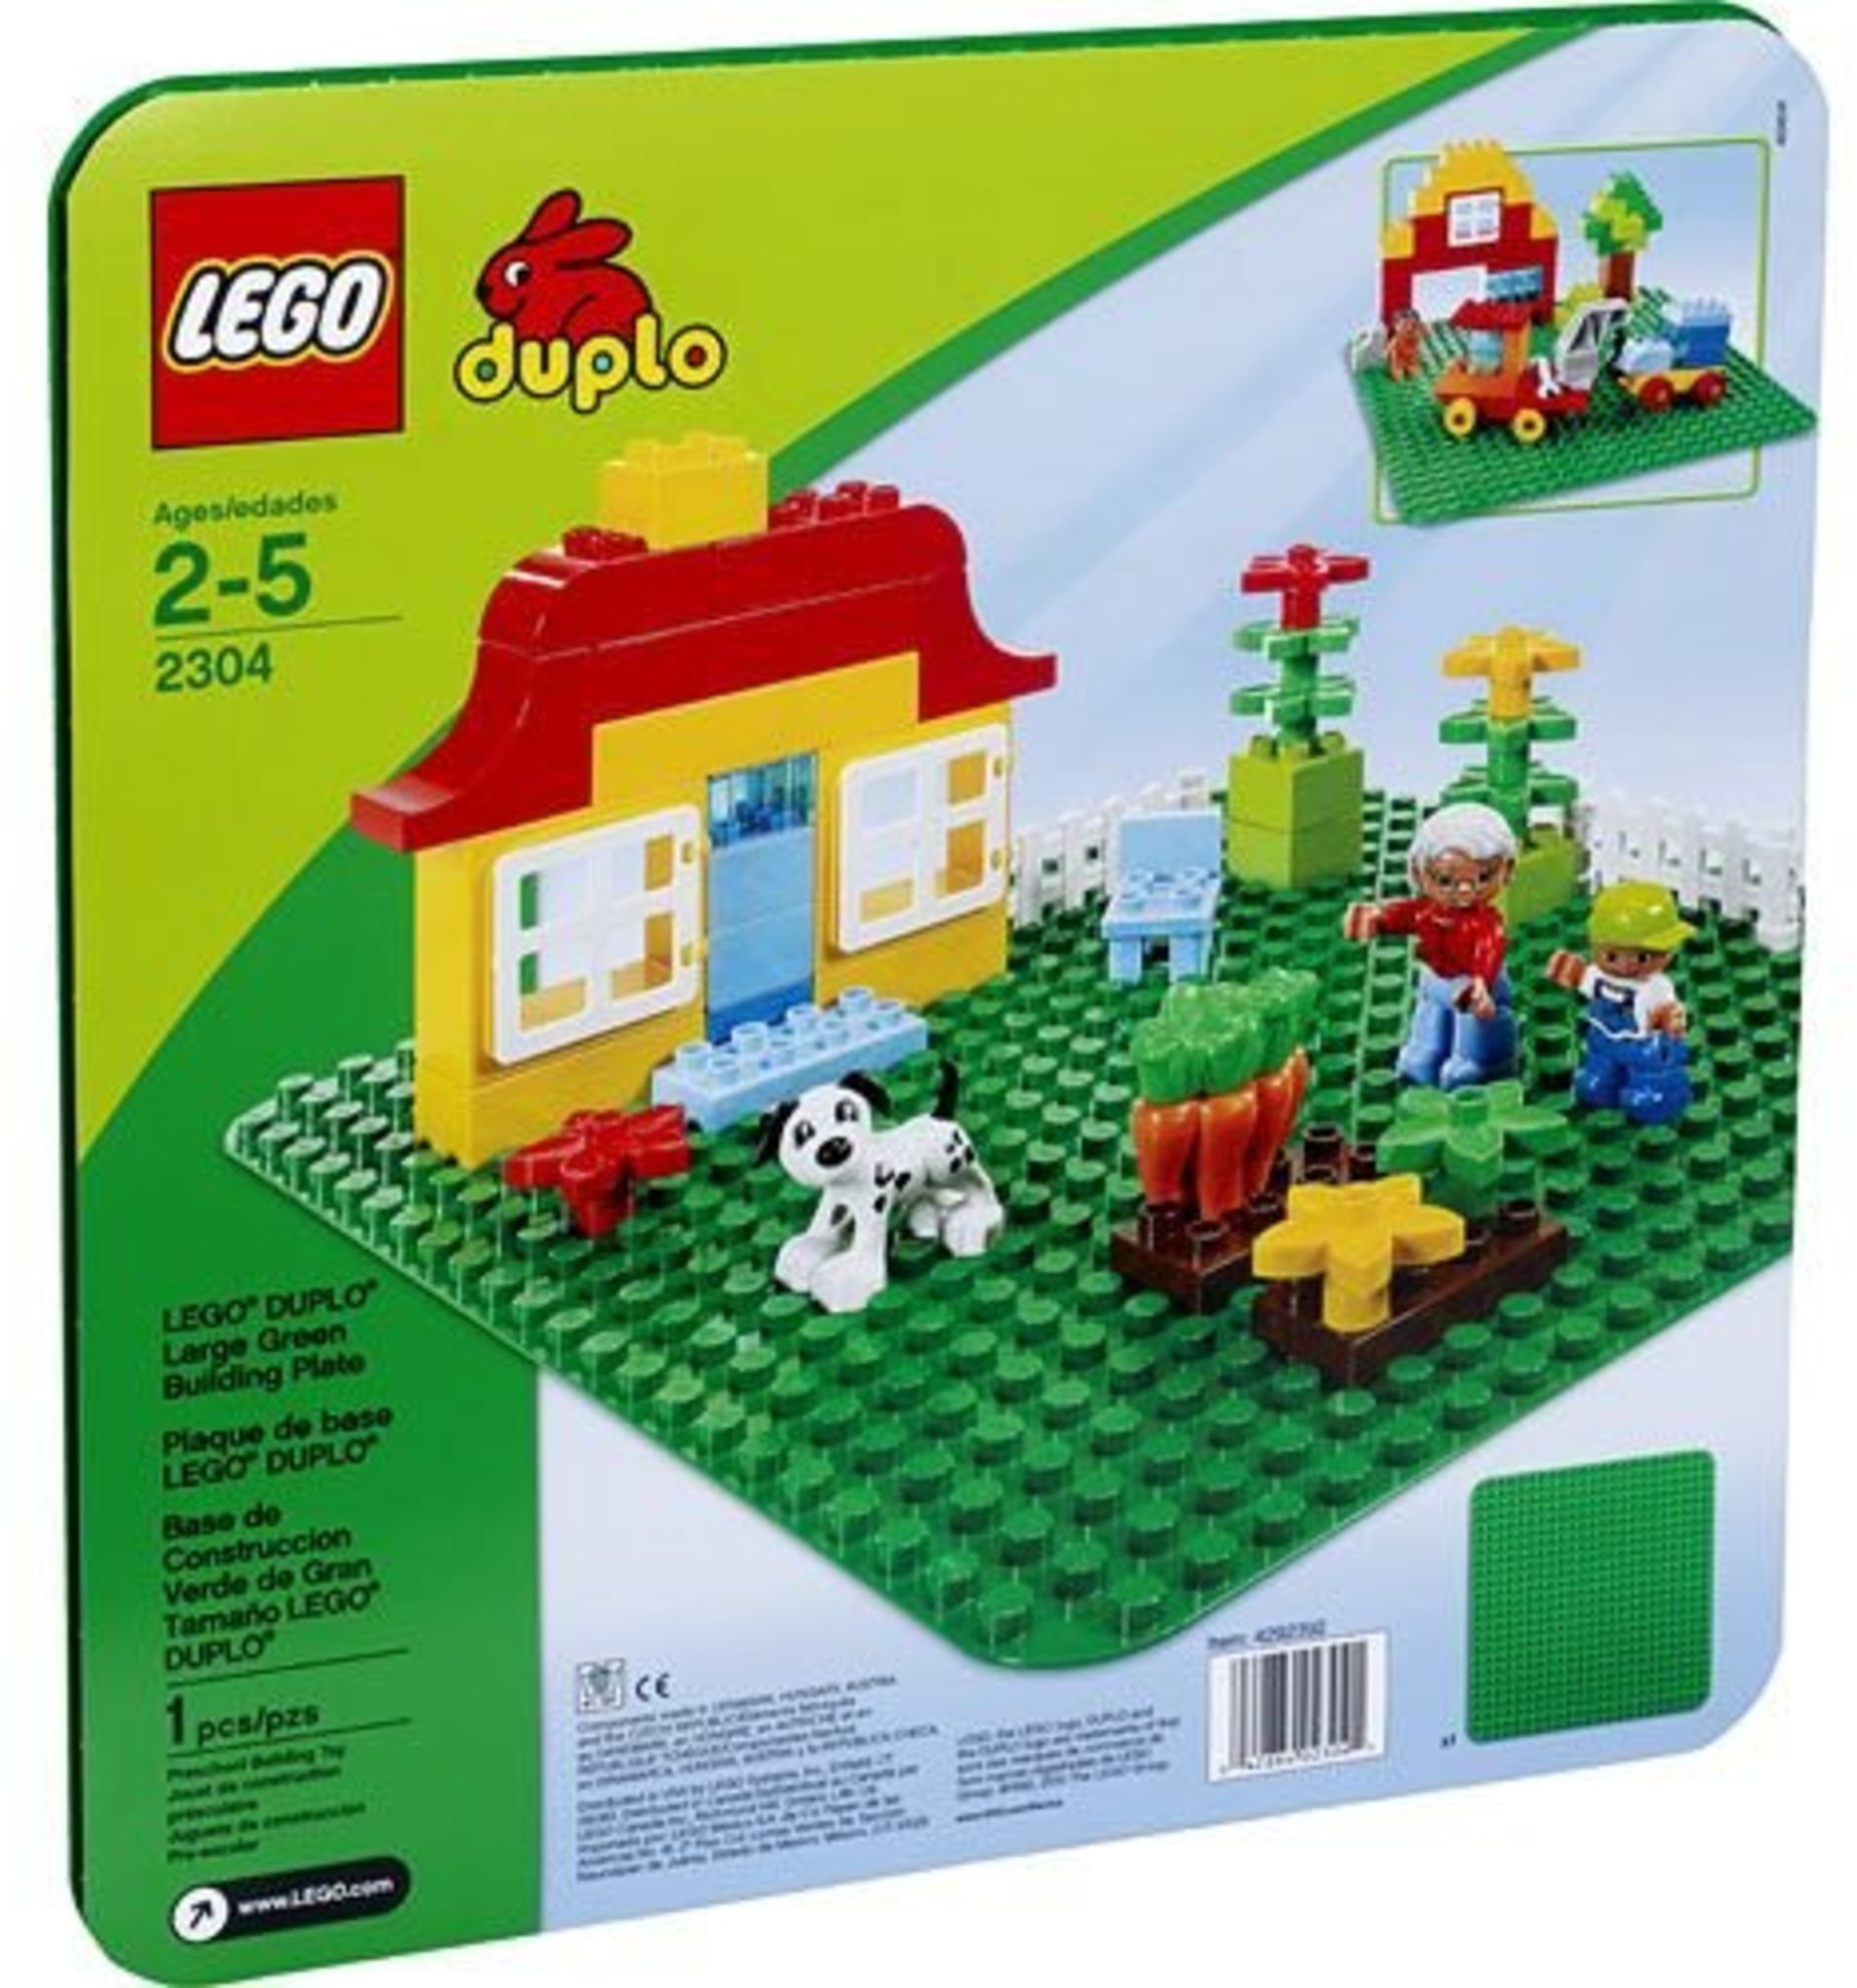 LEGO Duplo 2304 - Base verde